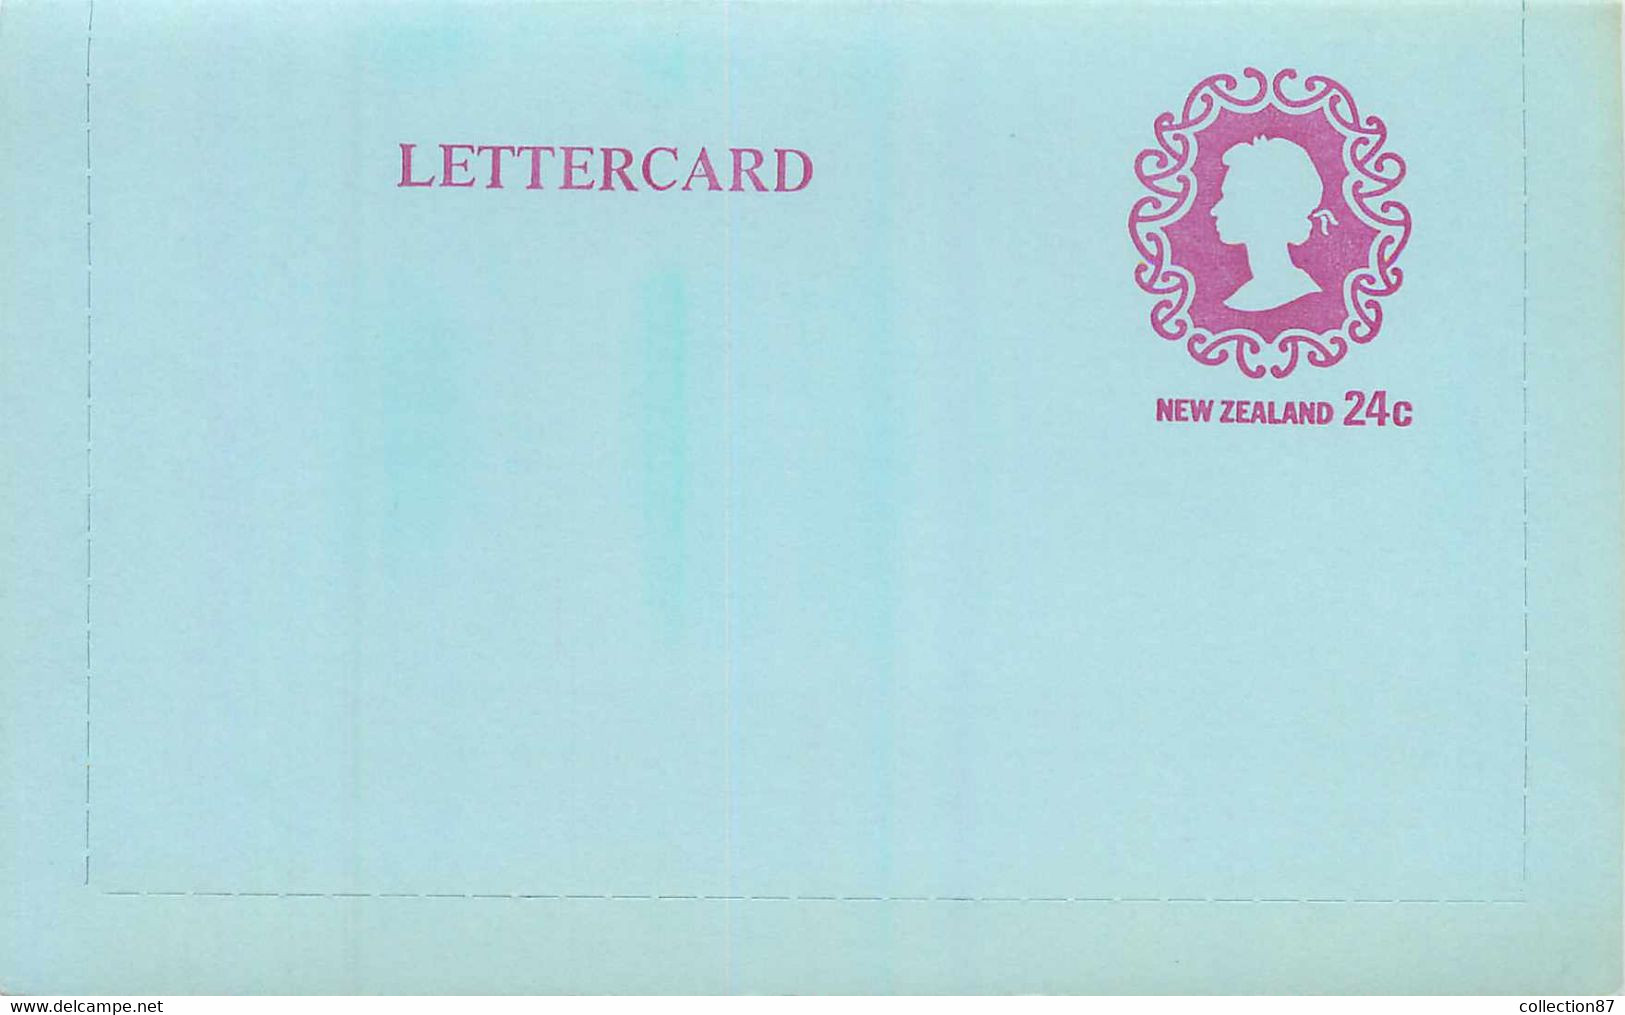 NEW ZEALAND - LETTERCARD 24c Postage Paid < ENTIER POSTAL NOUVELLE ZELANDE 24 Cent - QUEEN ELISABETH - Postal Stationery